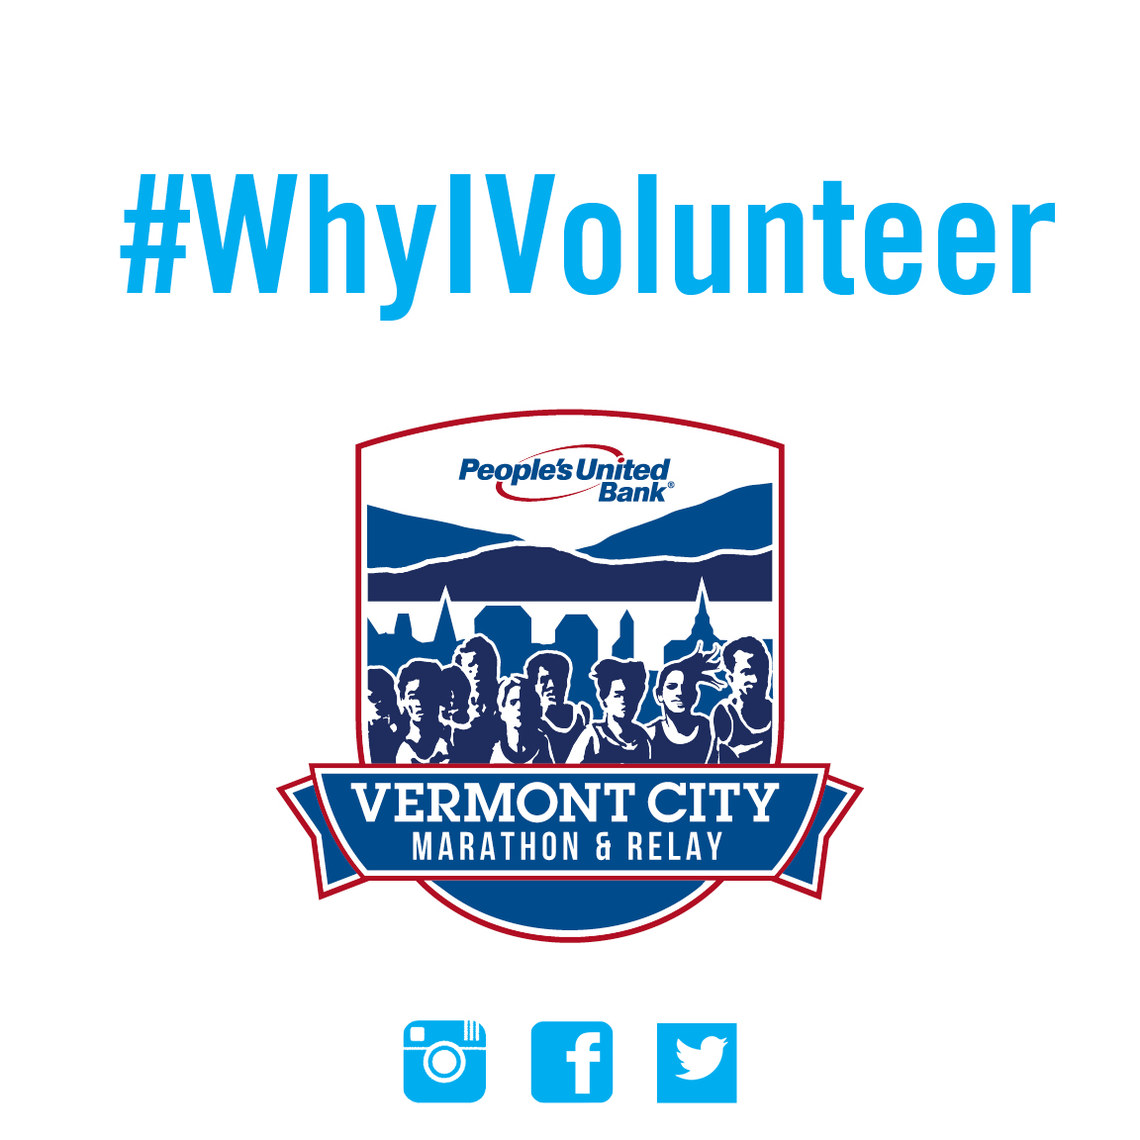 Why I Volunteer logo